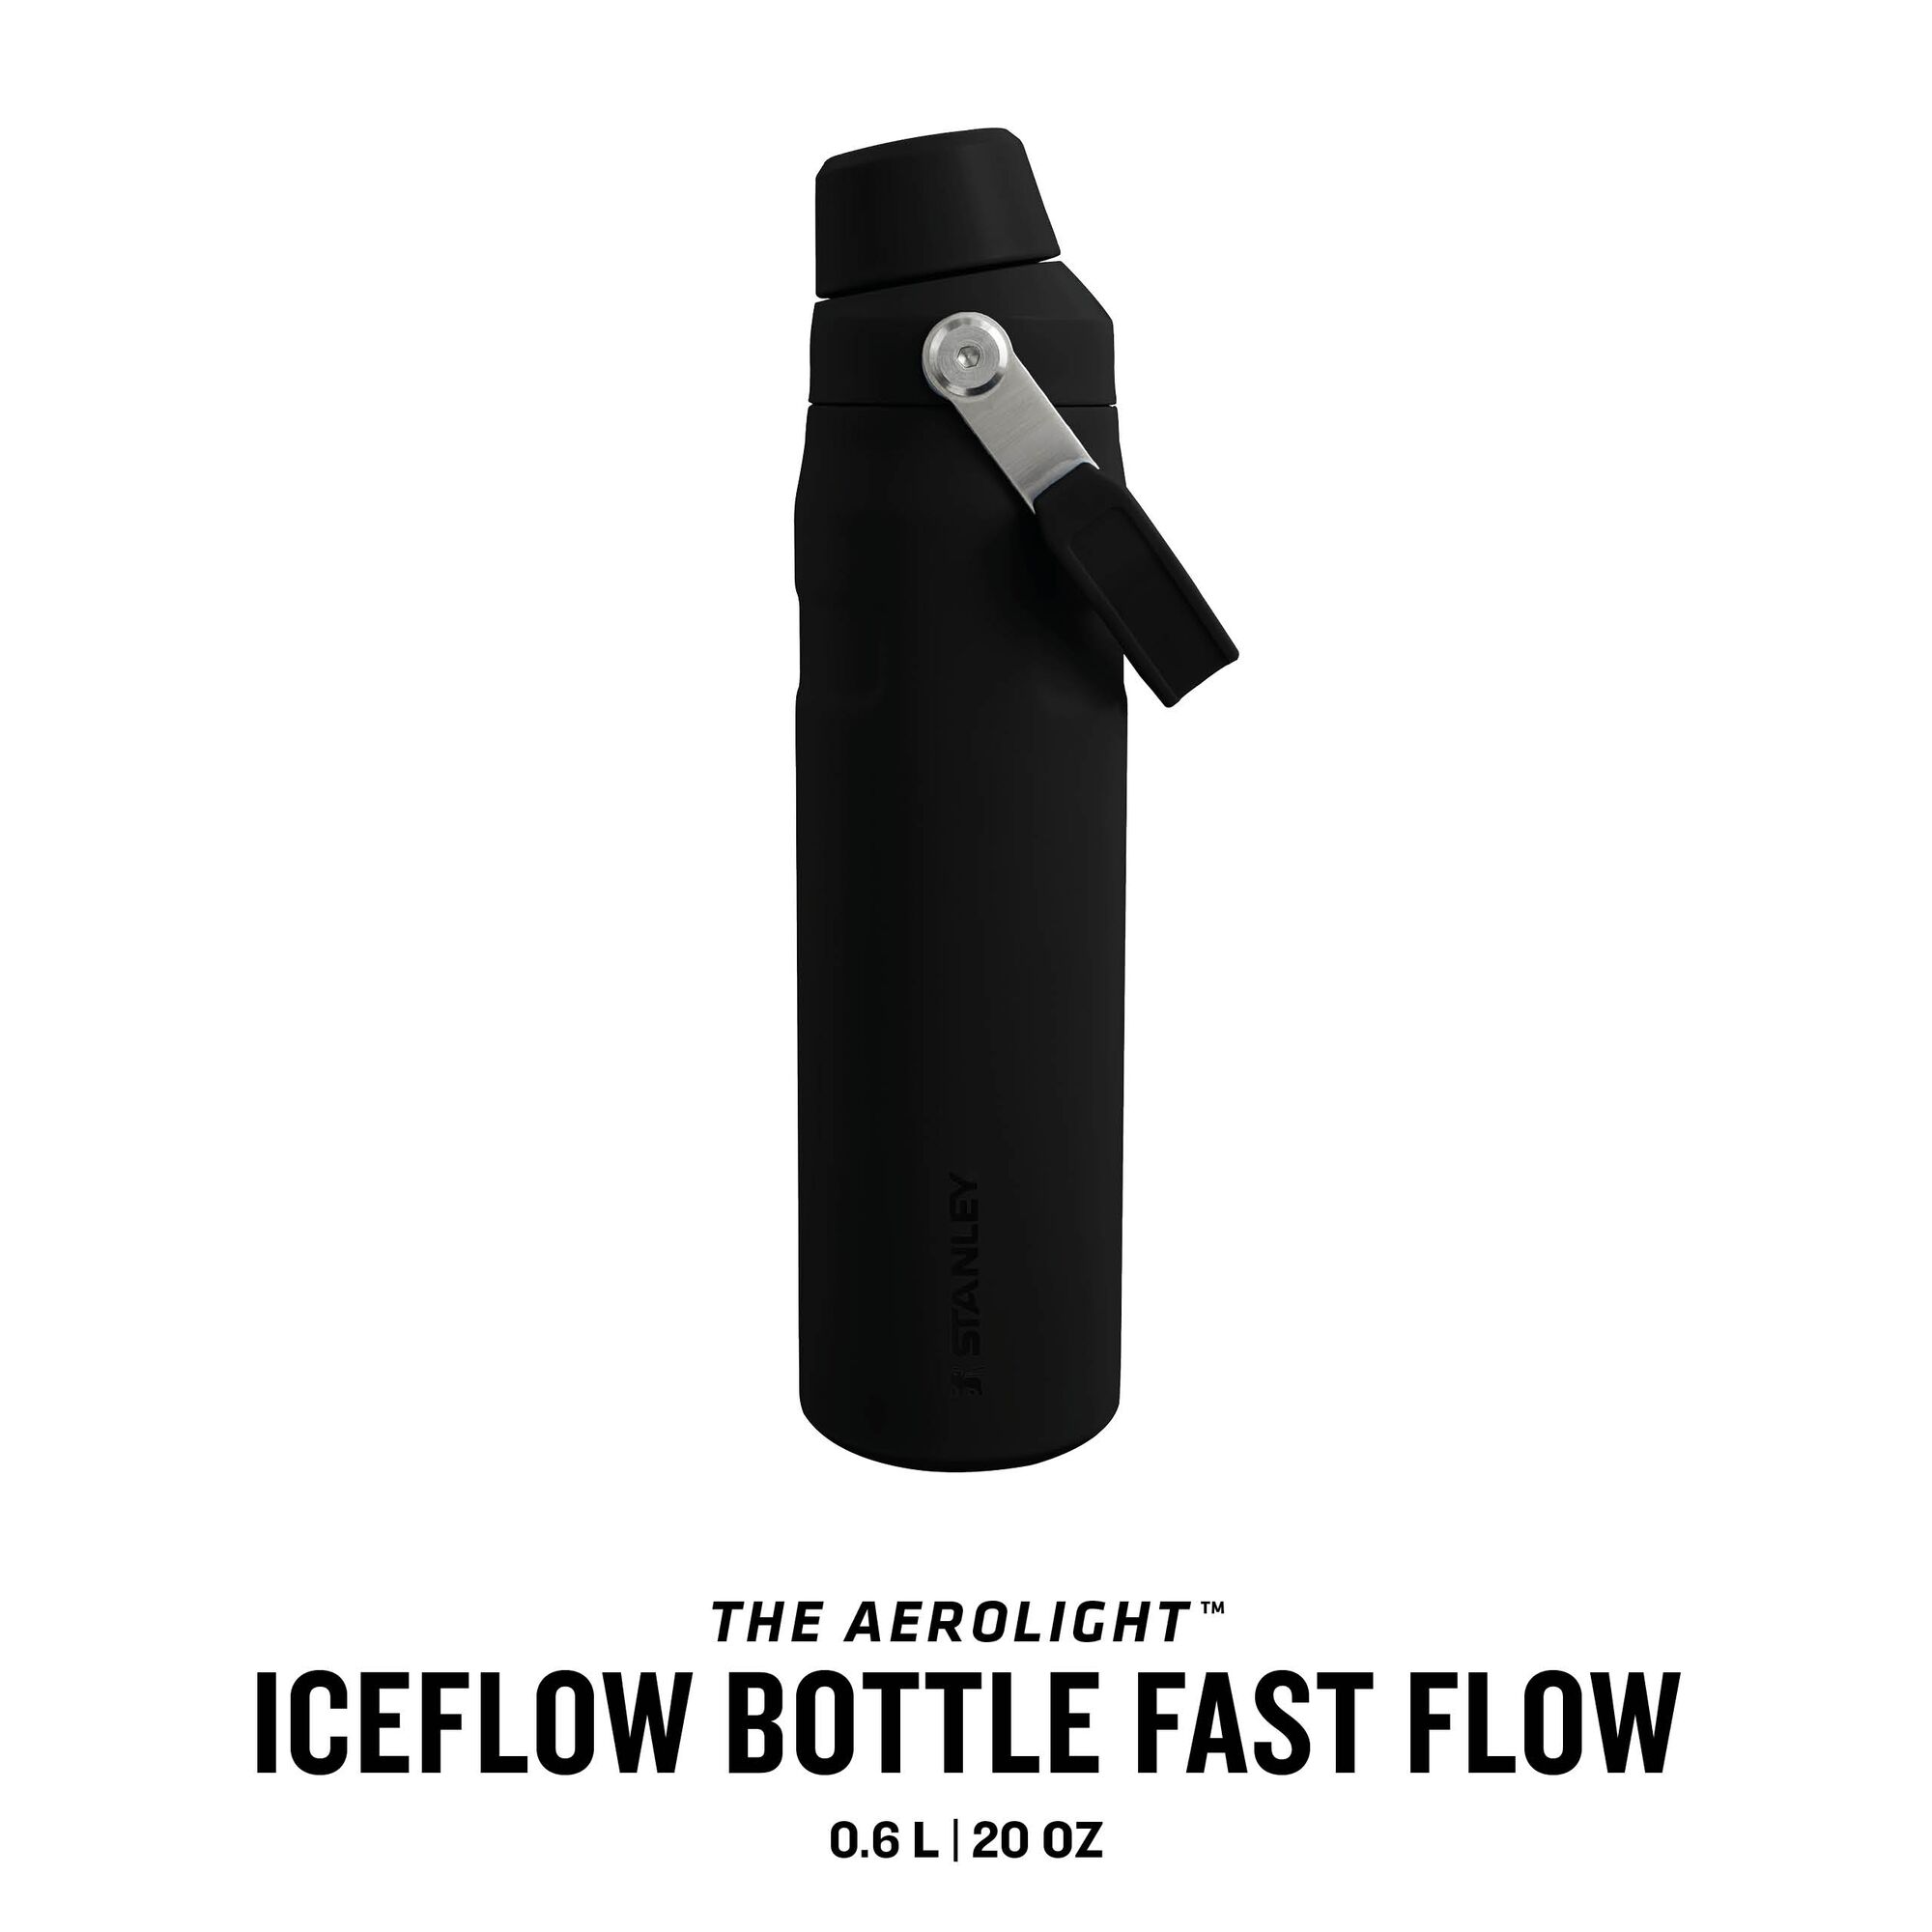 Stanley Isolierflasche The Aerolight Iceflow Bottle Fast Flow 0,6l Black